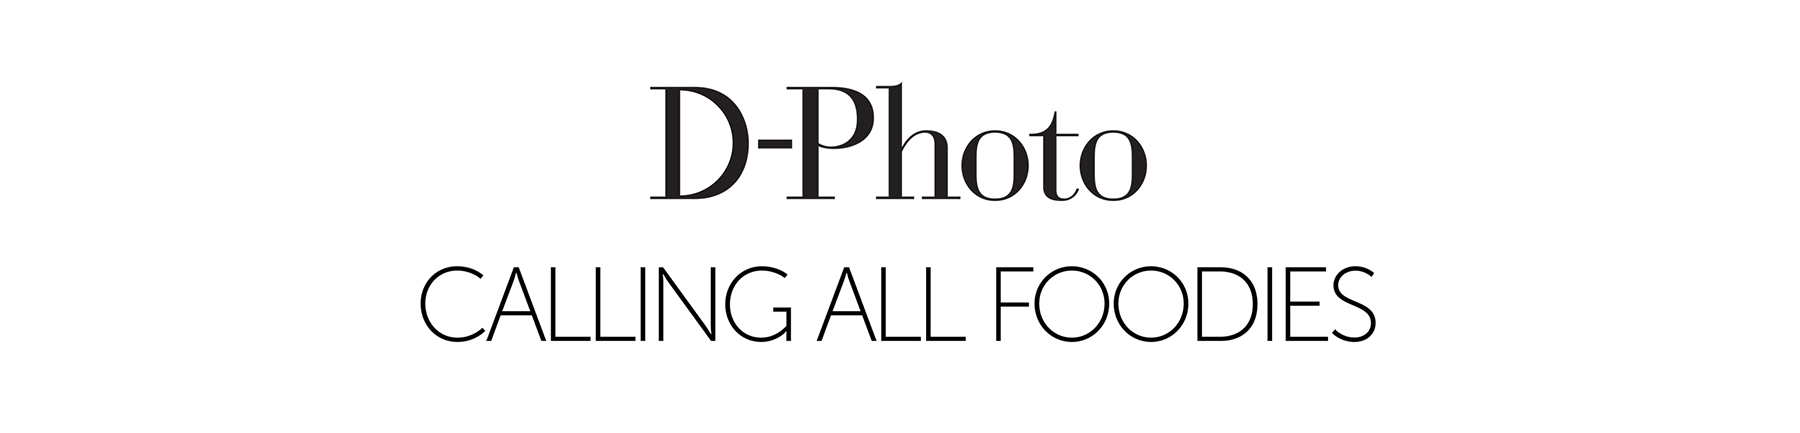 D-Photo Magazine 2015・Calling All Foodies・Manja Wachsmuth